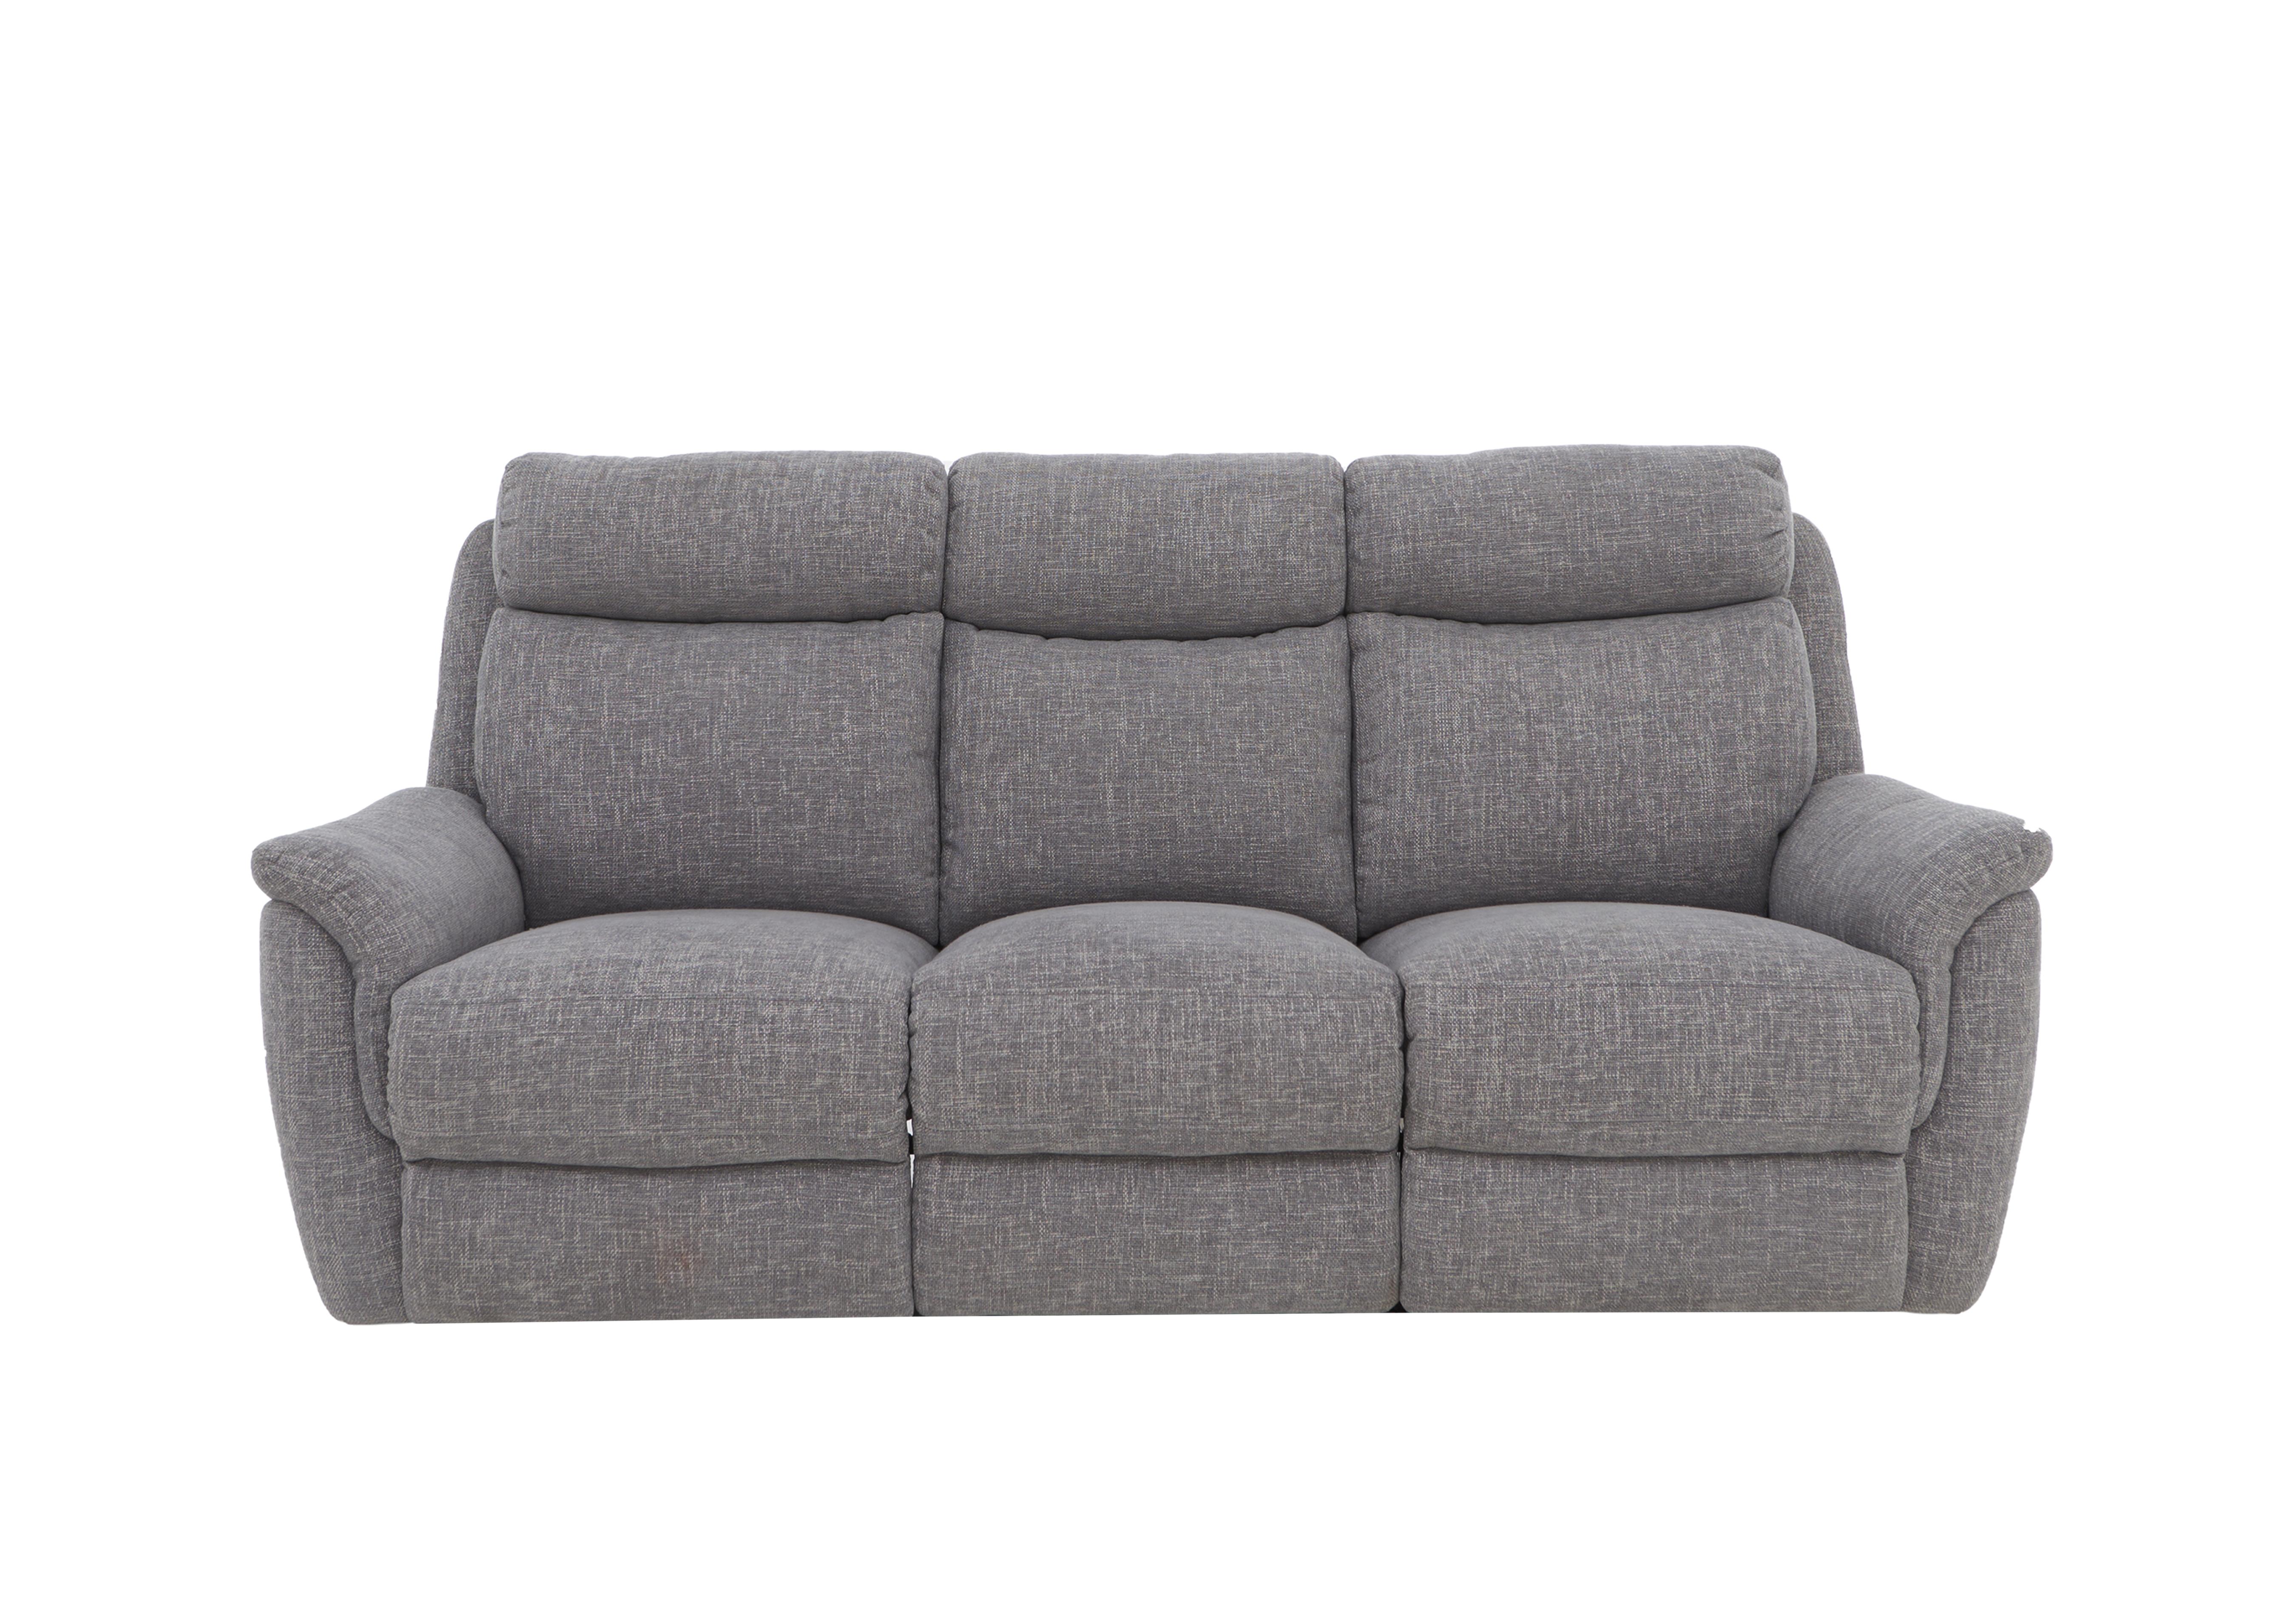 Orlando 3 Seater Fabric Sofa in Anivia Grey 12445 on Furniture Village